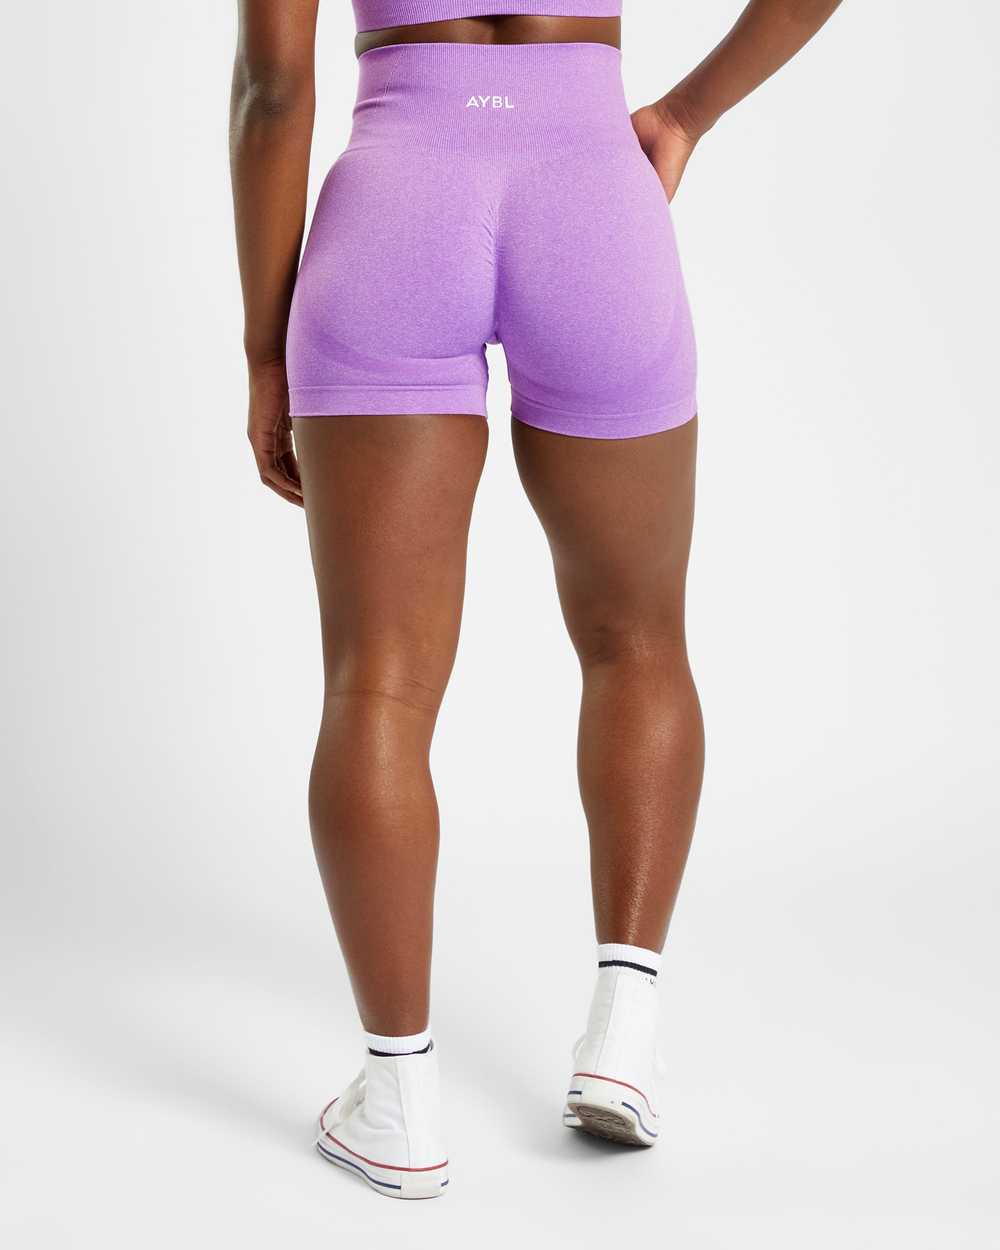 AYBL Empower Seamless Shorts - Purple Marl - image 2